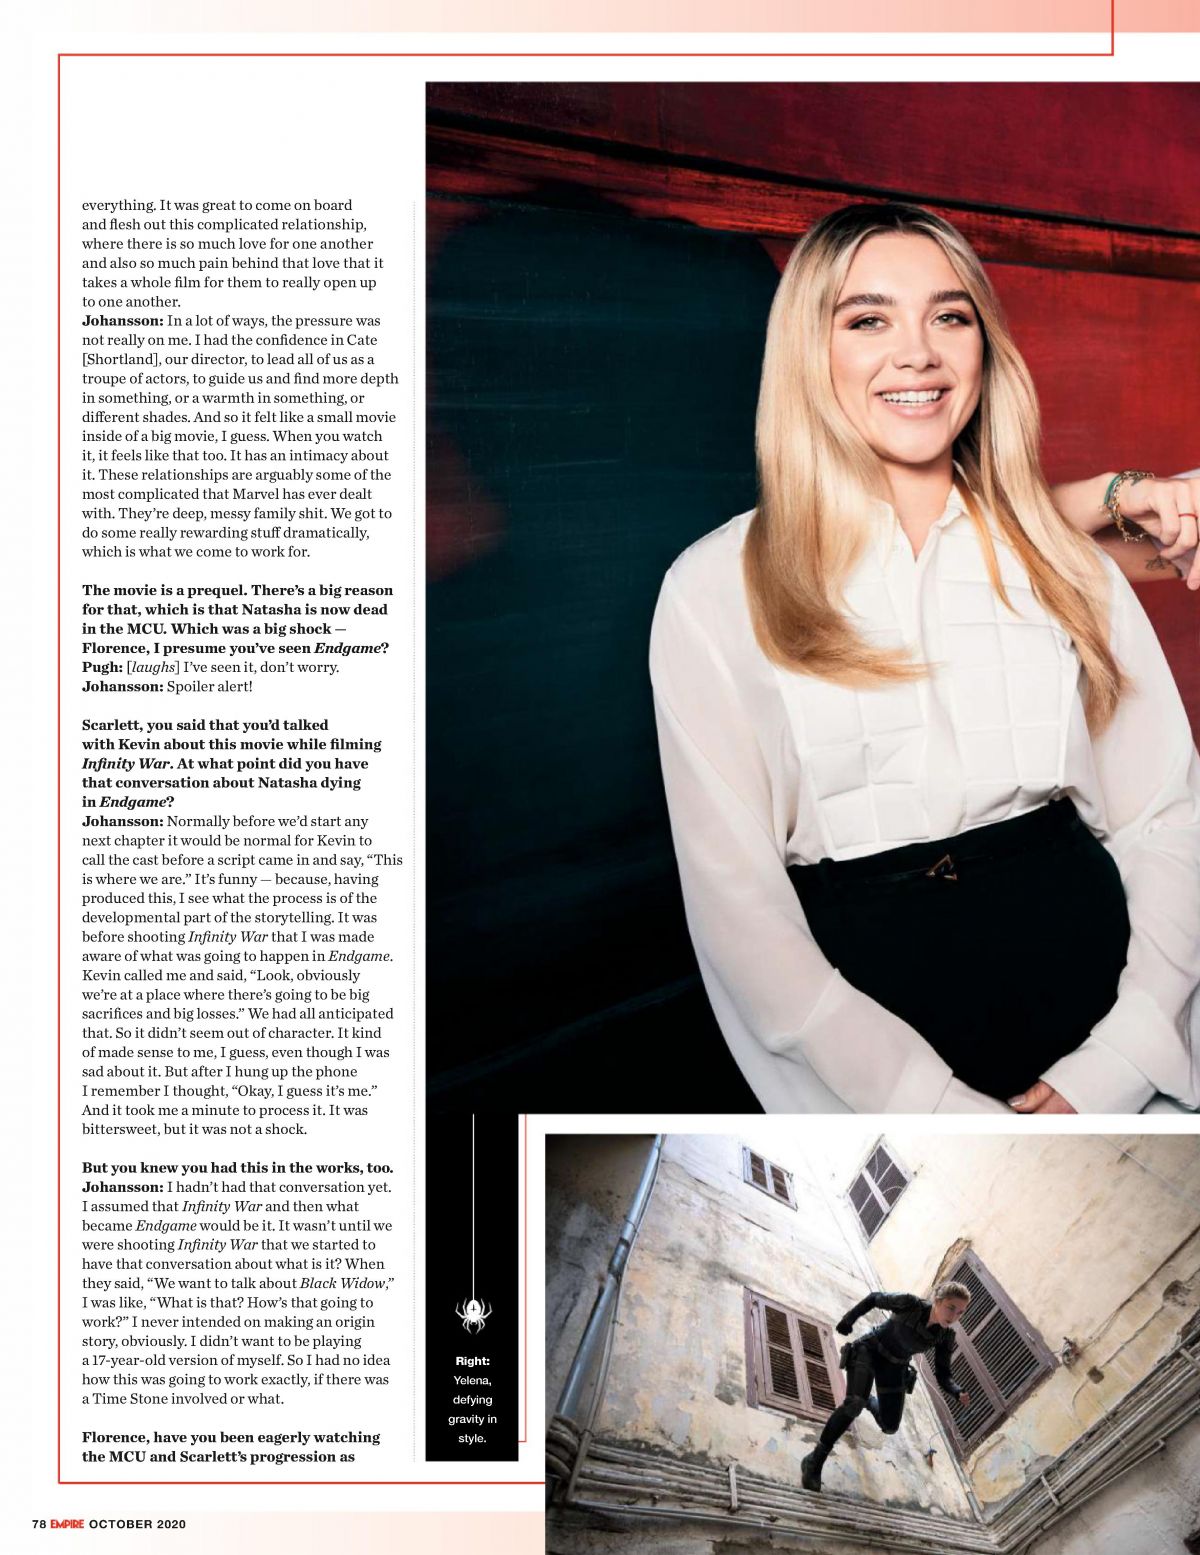 florence-pugh-and-scarlett-johansson-in-empire-magazine-october-2020-3.jpg